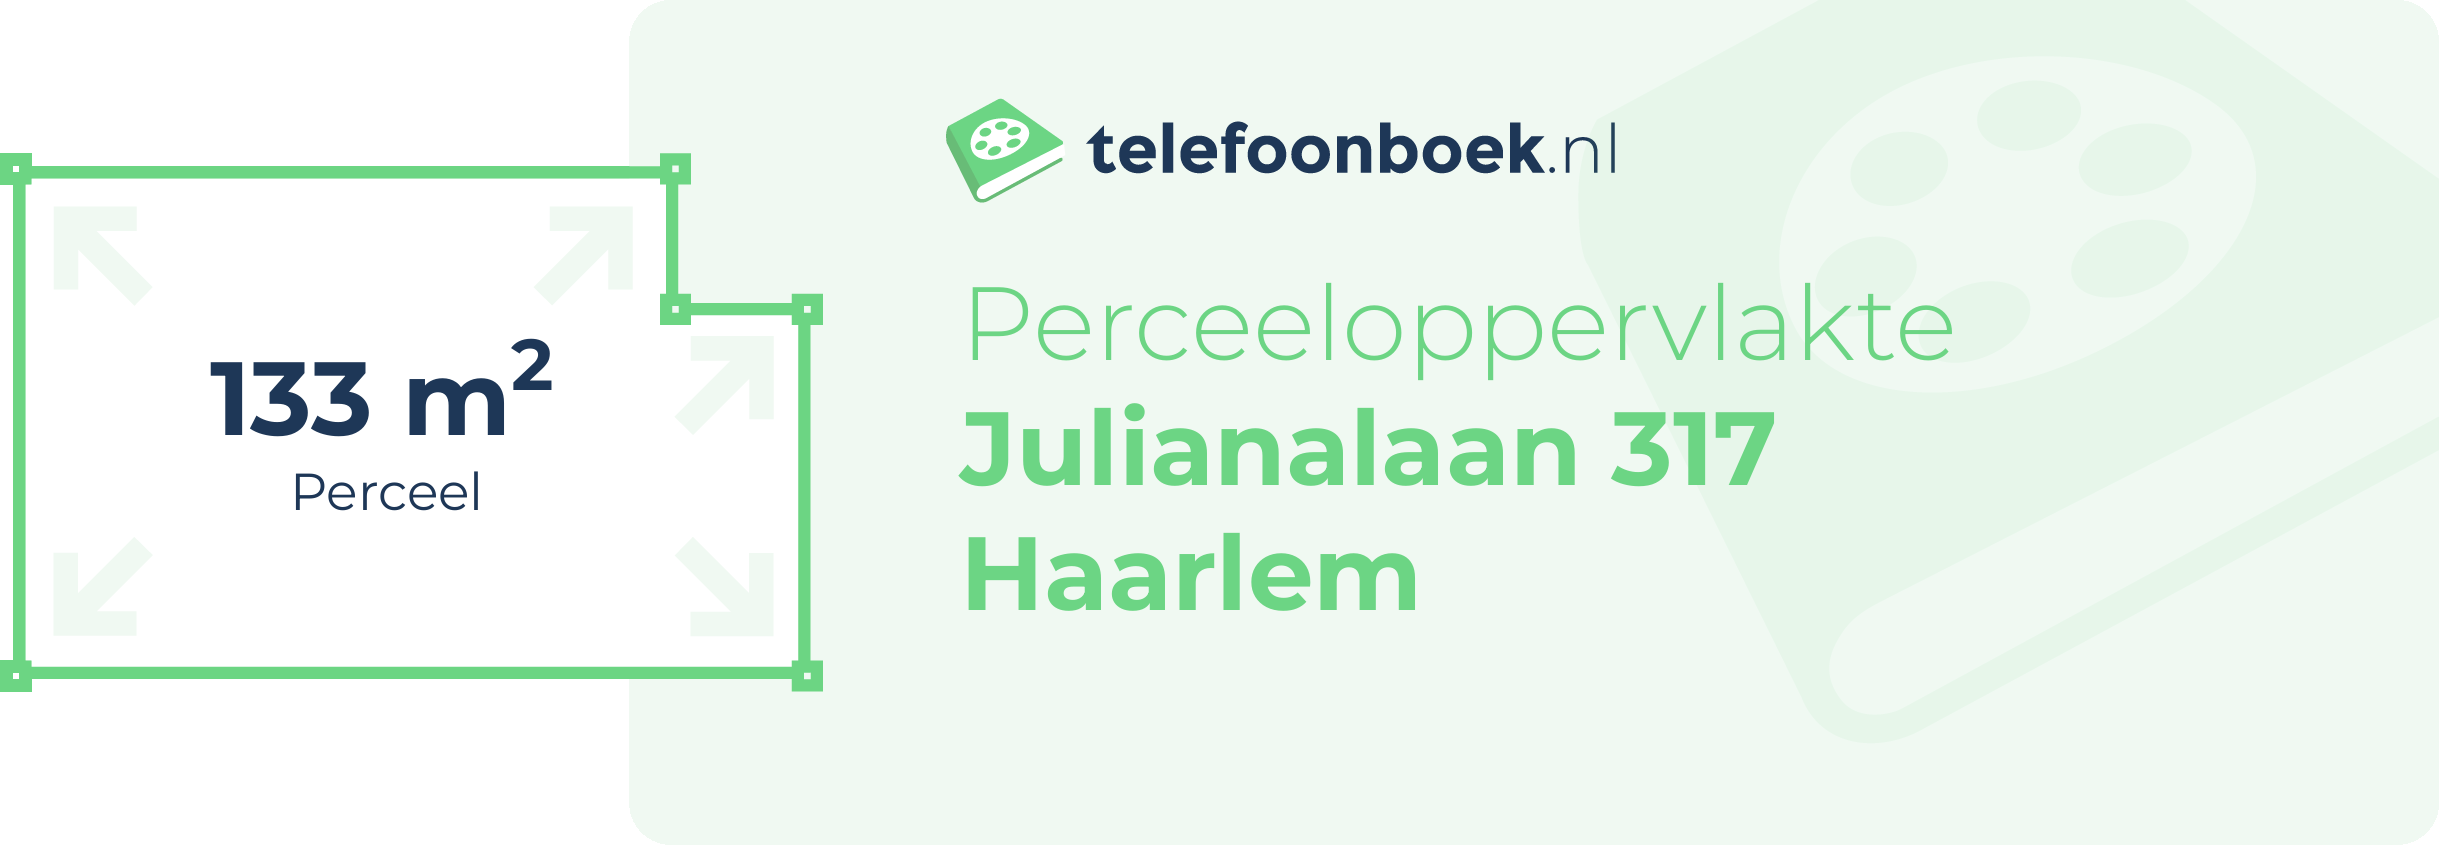 Perceeloppervlakte Julianalaan 317 Haarlem